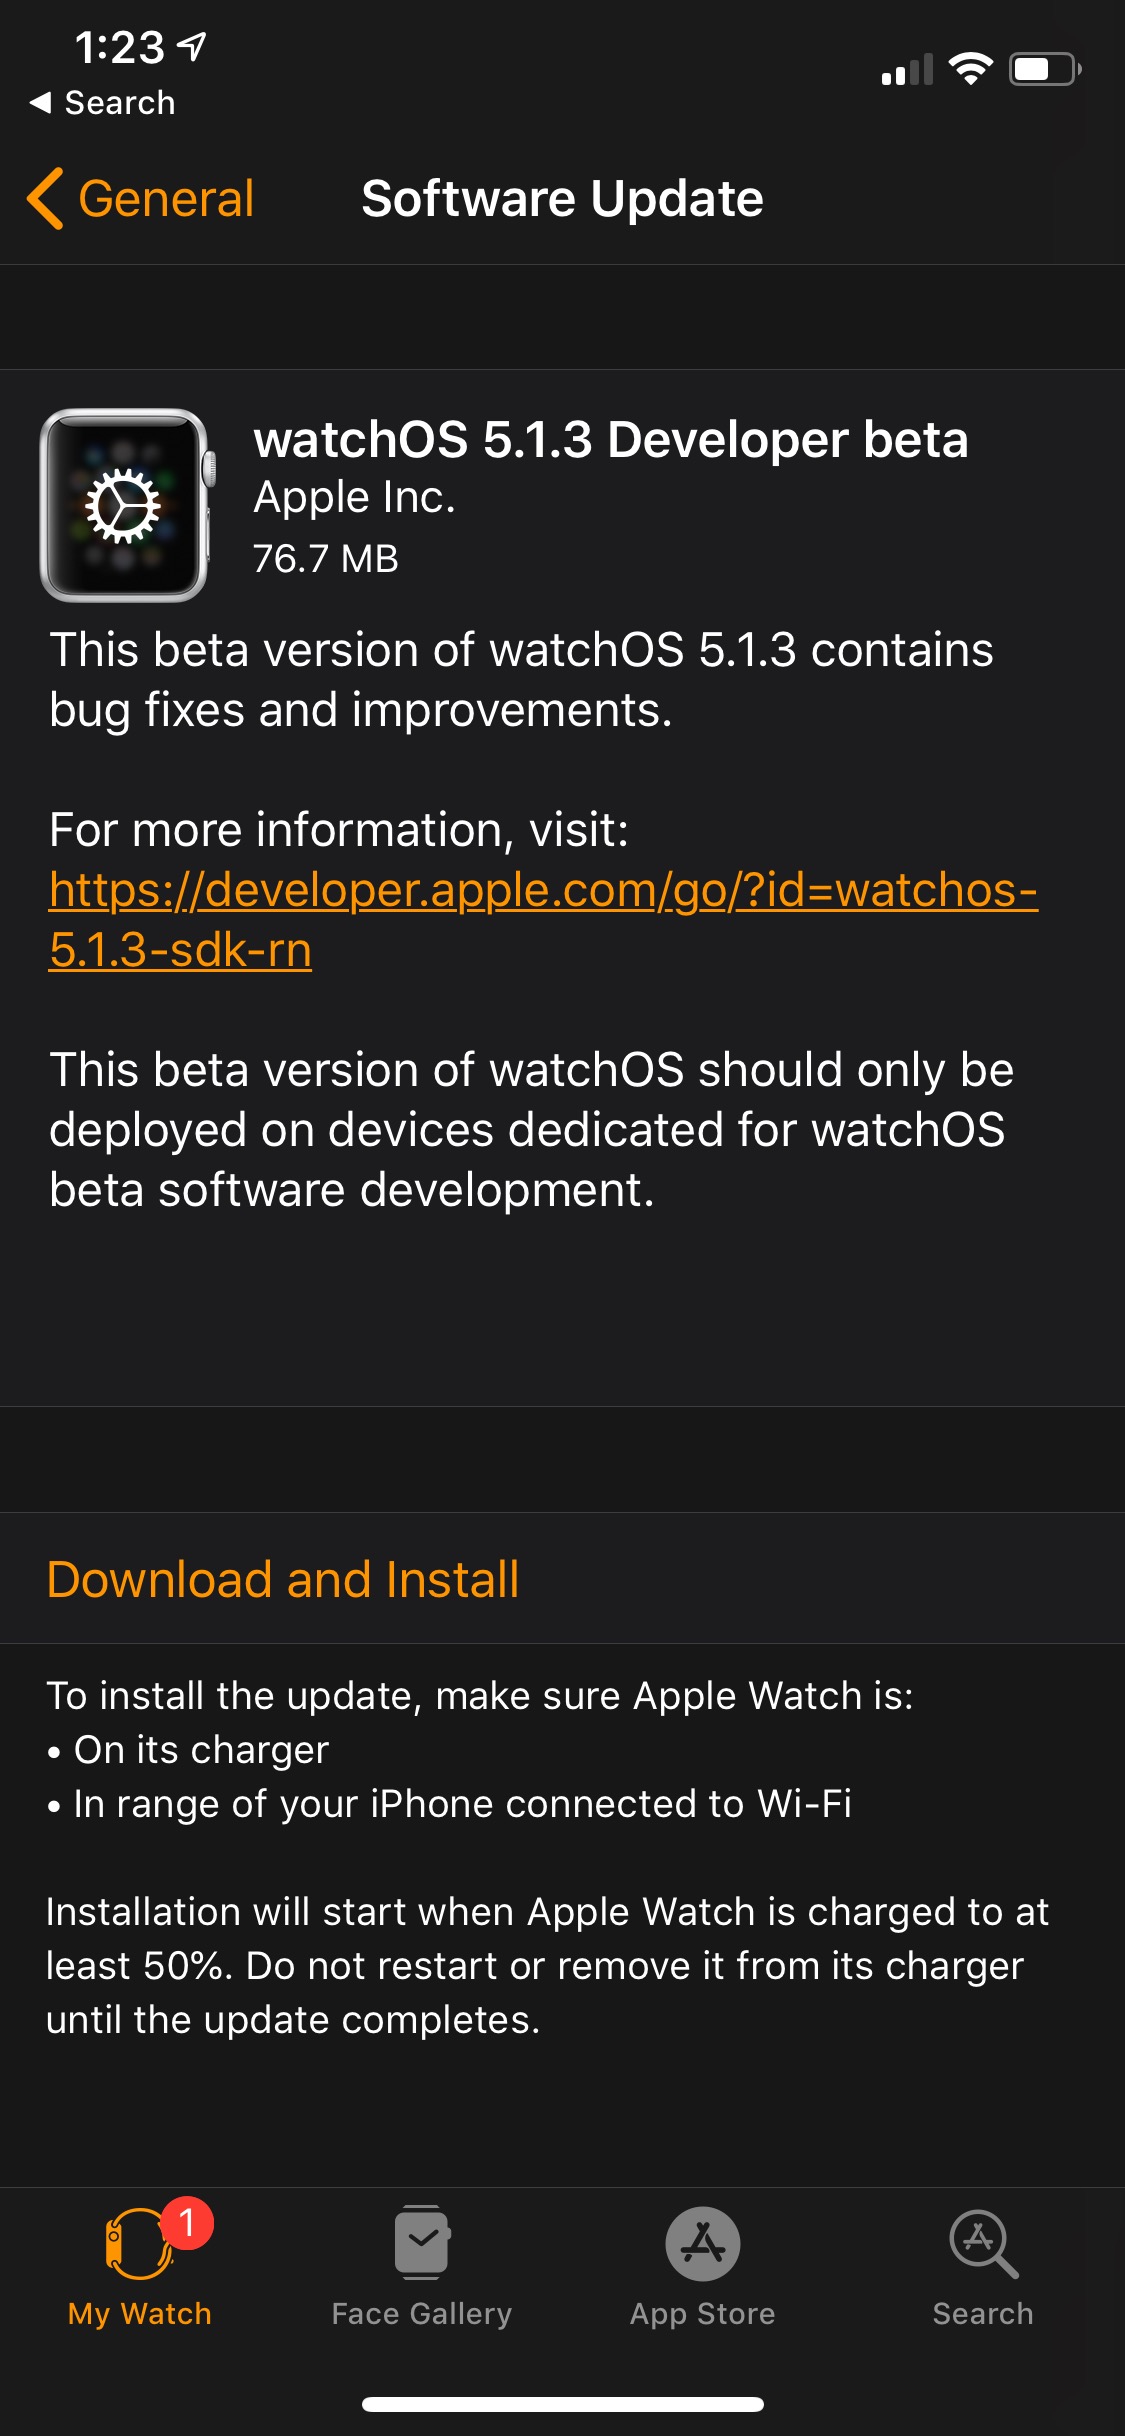 Apple Seeds watchOS 5.1.3 Beta to Developers [Download]